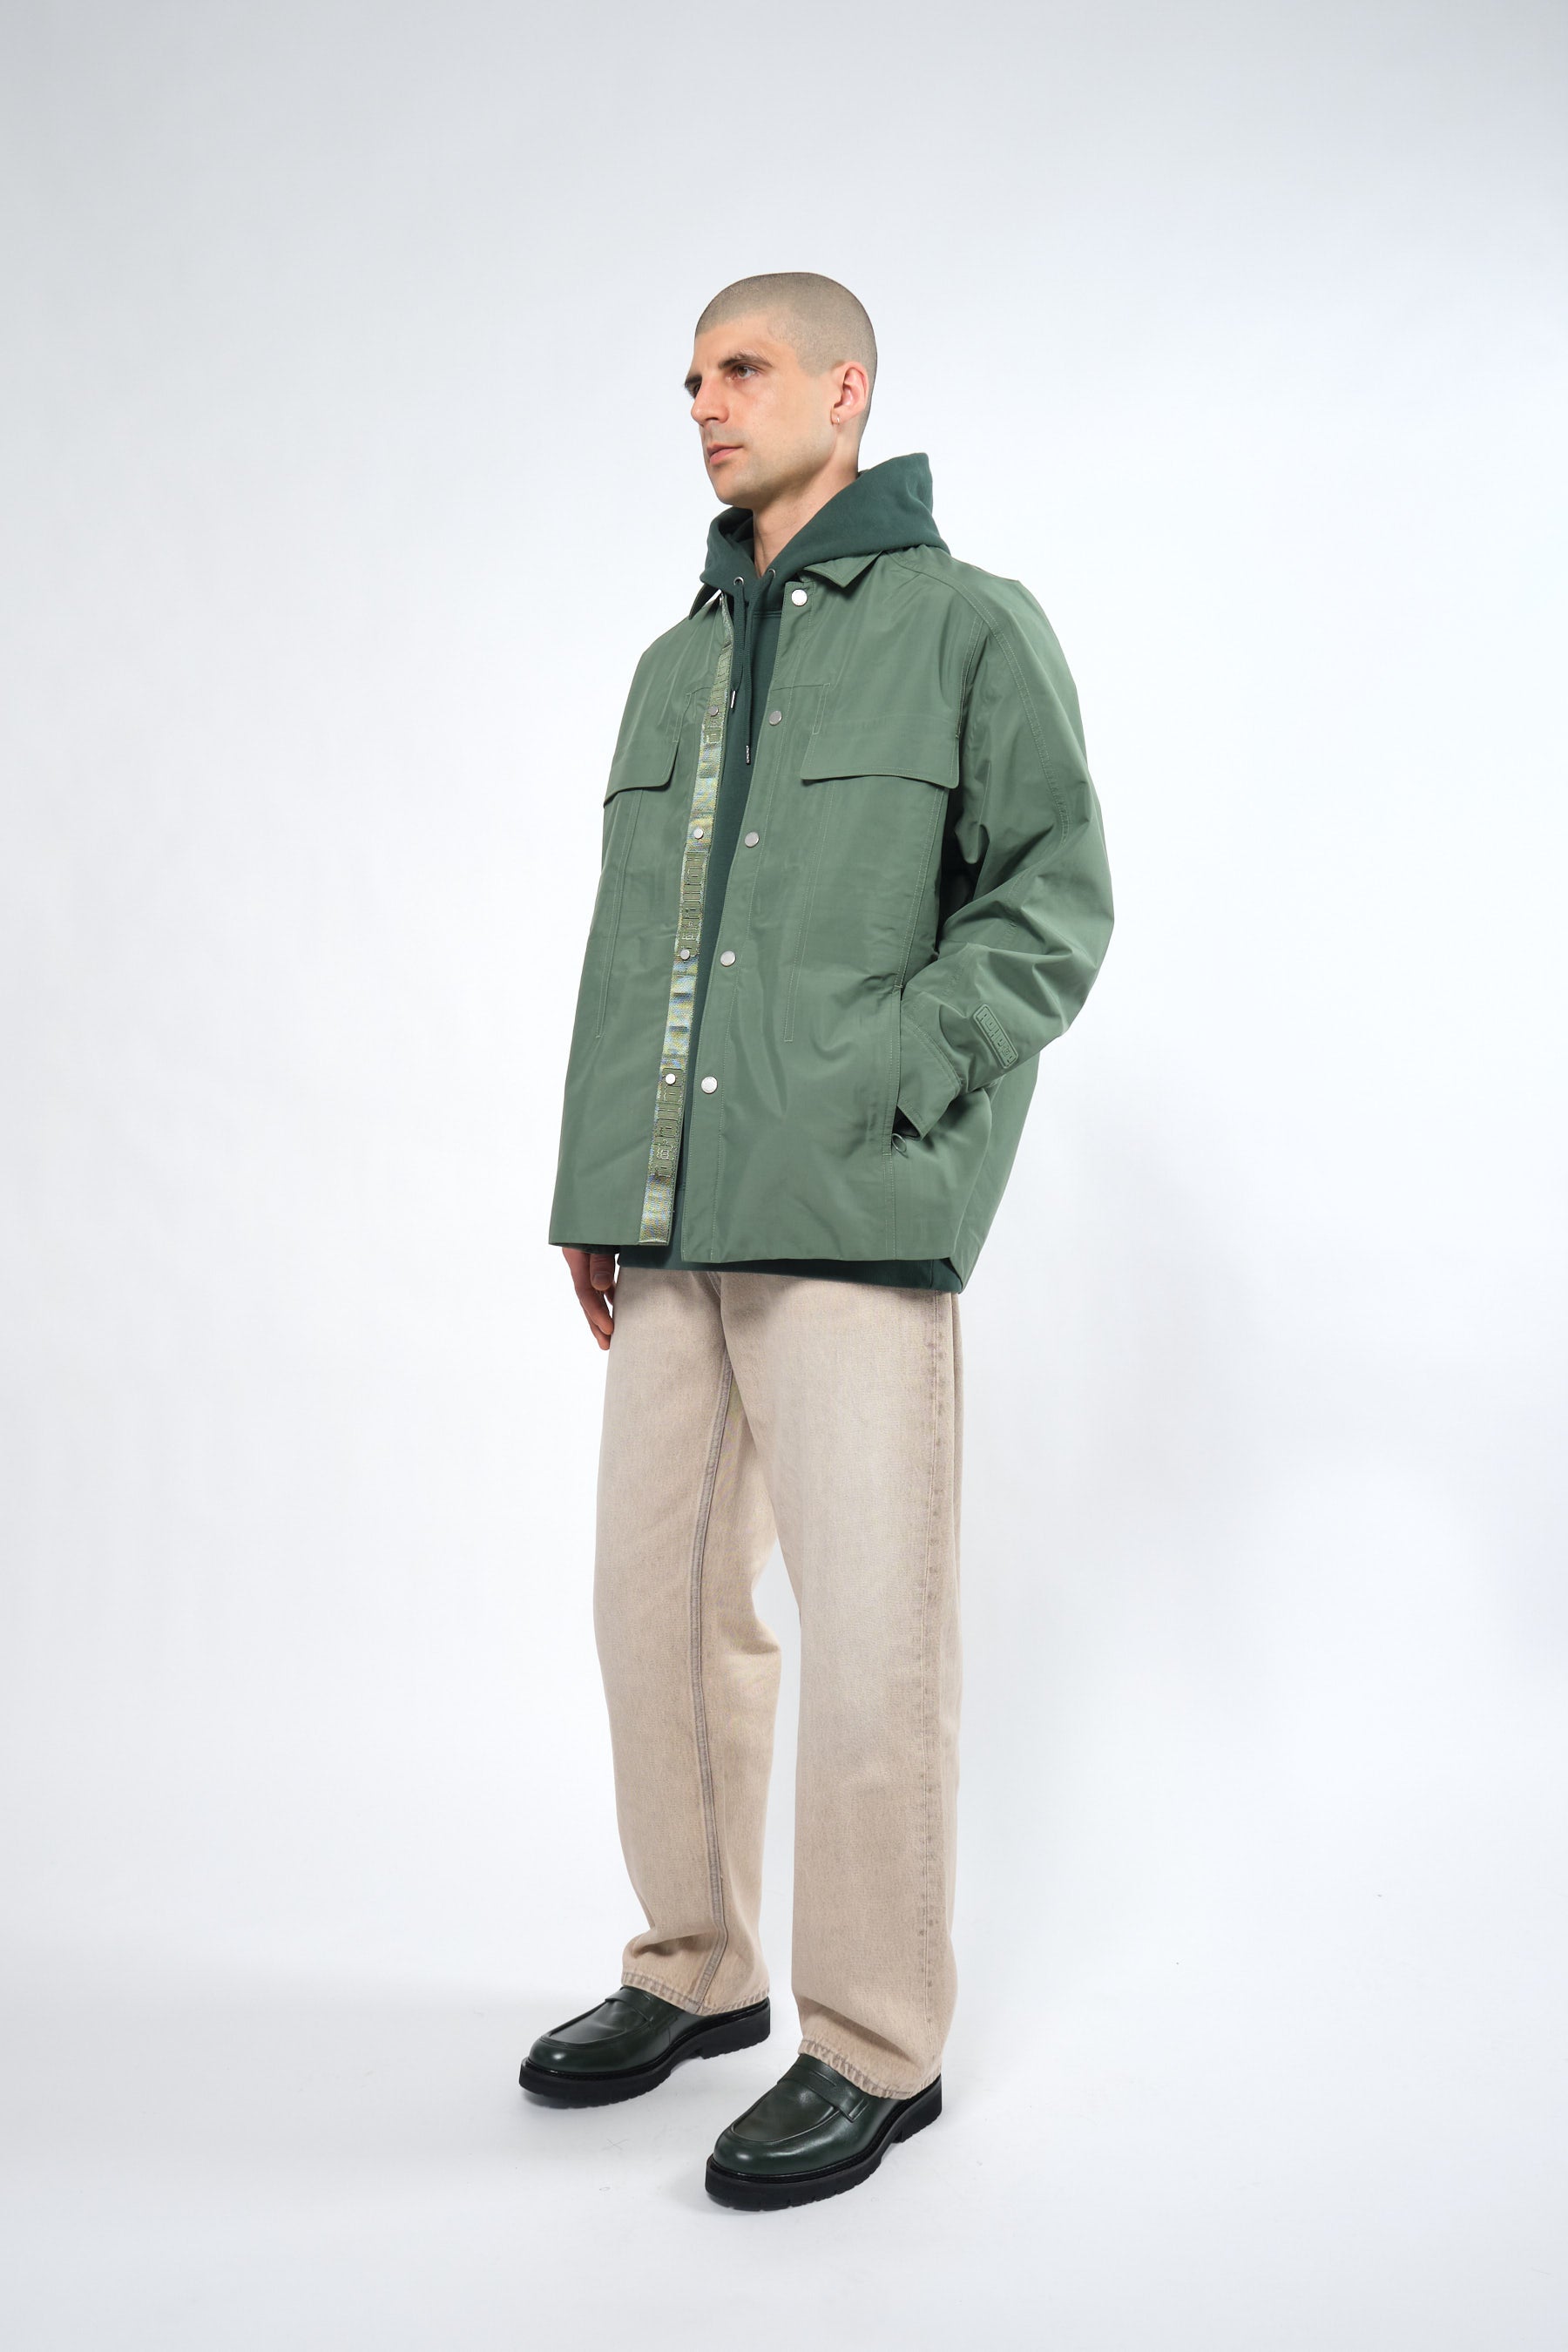  3L Green Waterproof Rain Jacket with Hood - Adhere To  - 1